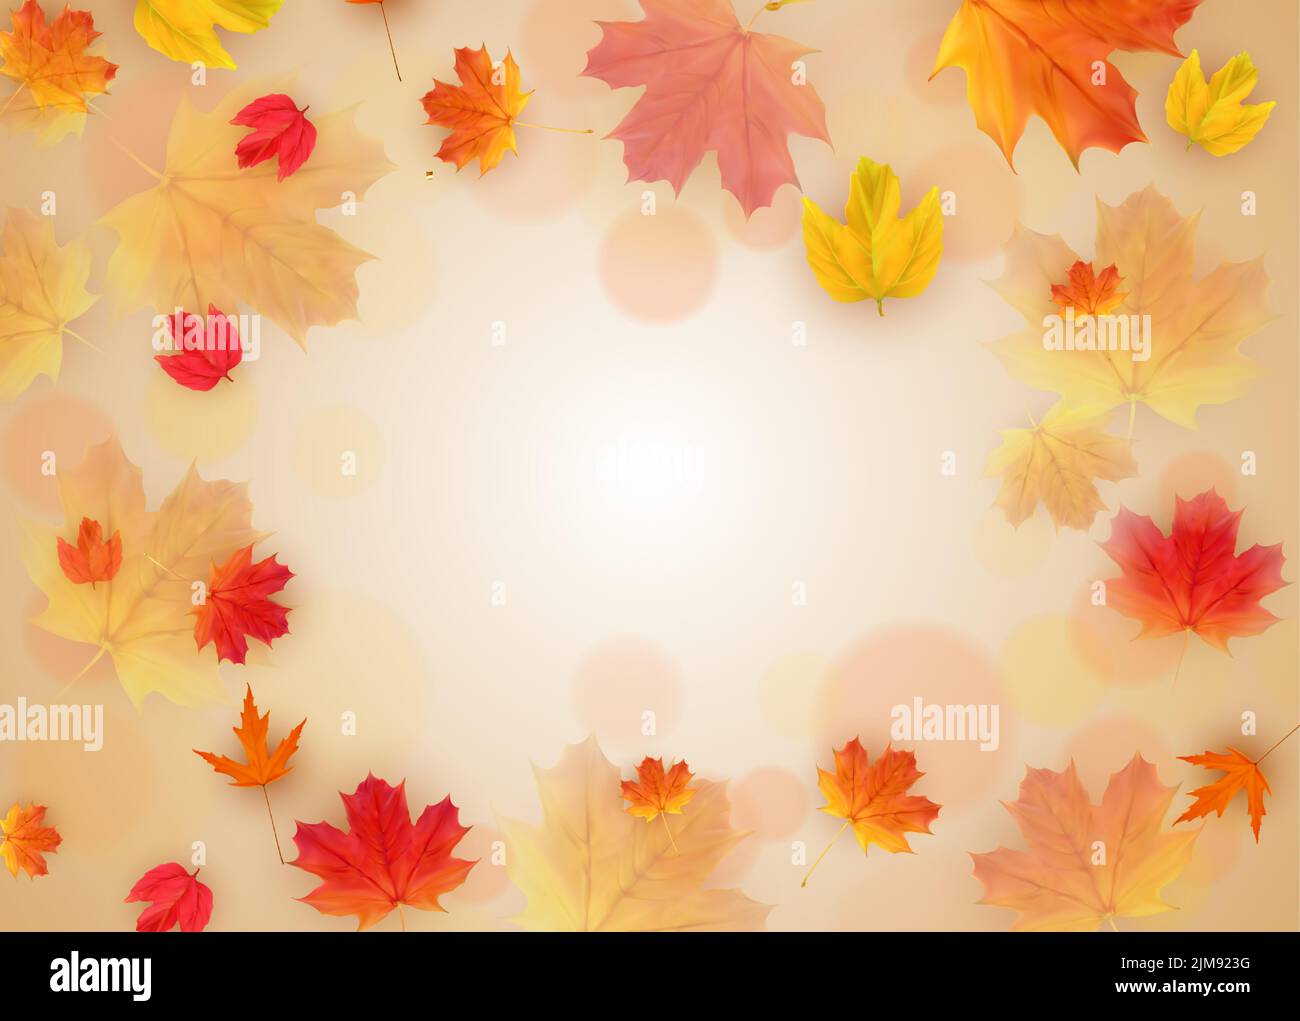 Autumn Fall Leaves Empty Frame Template. Vector Illustration Stock Vector